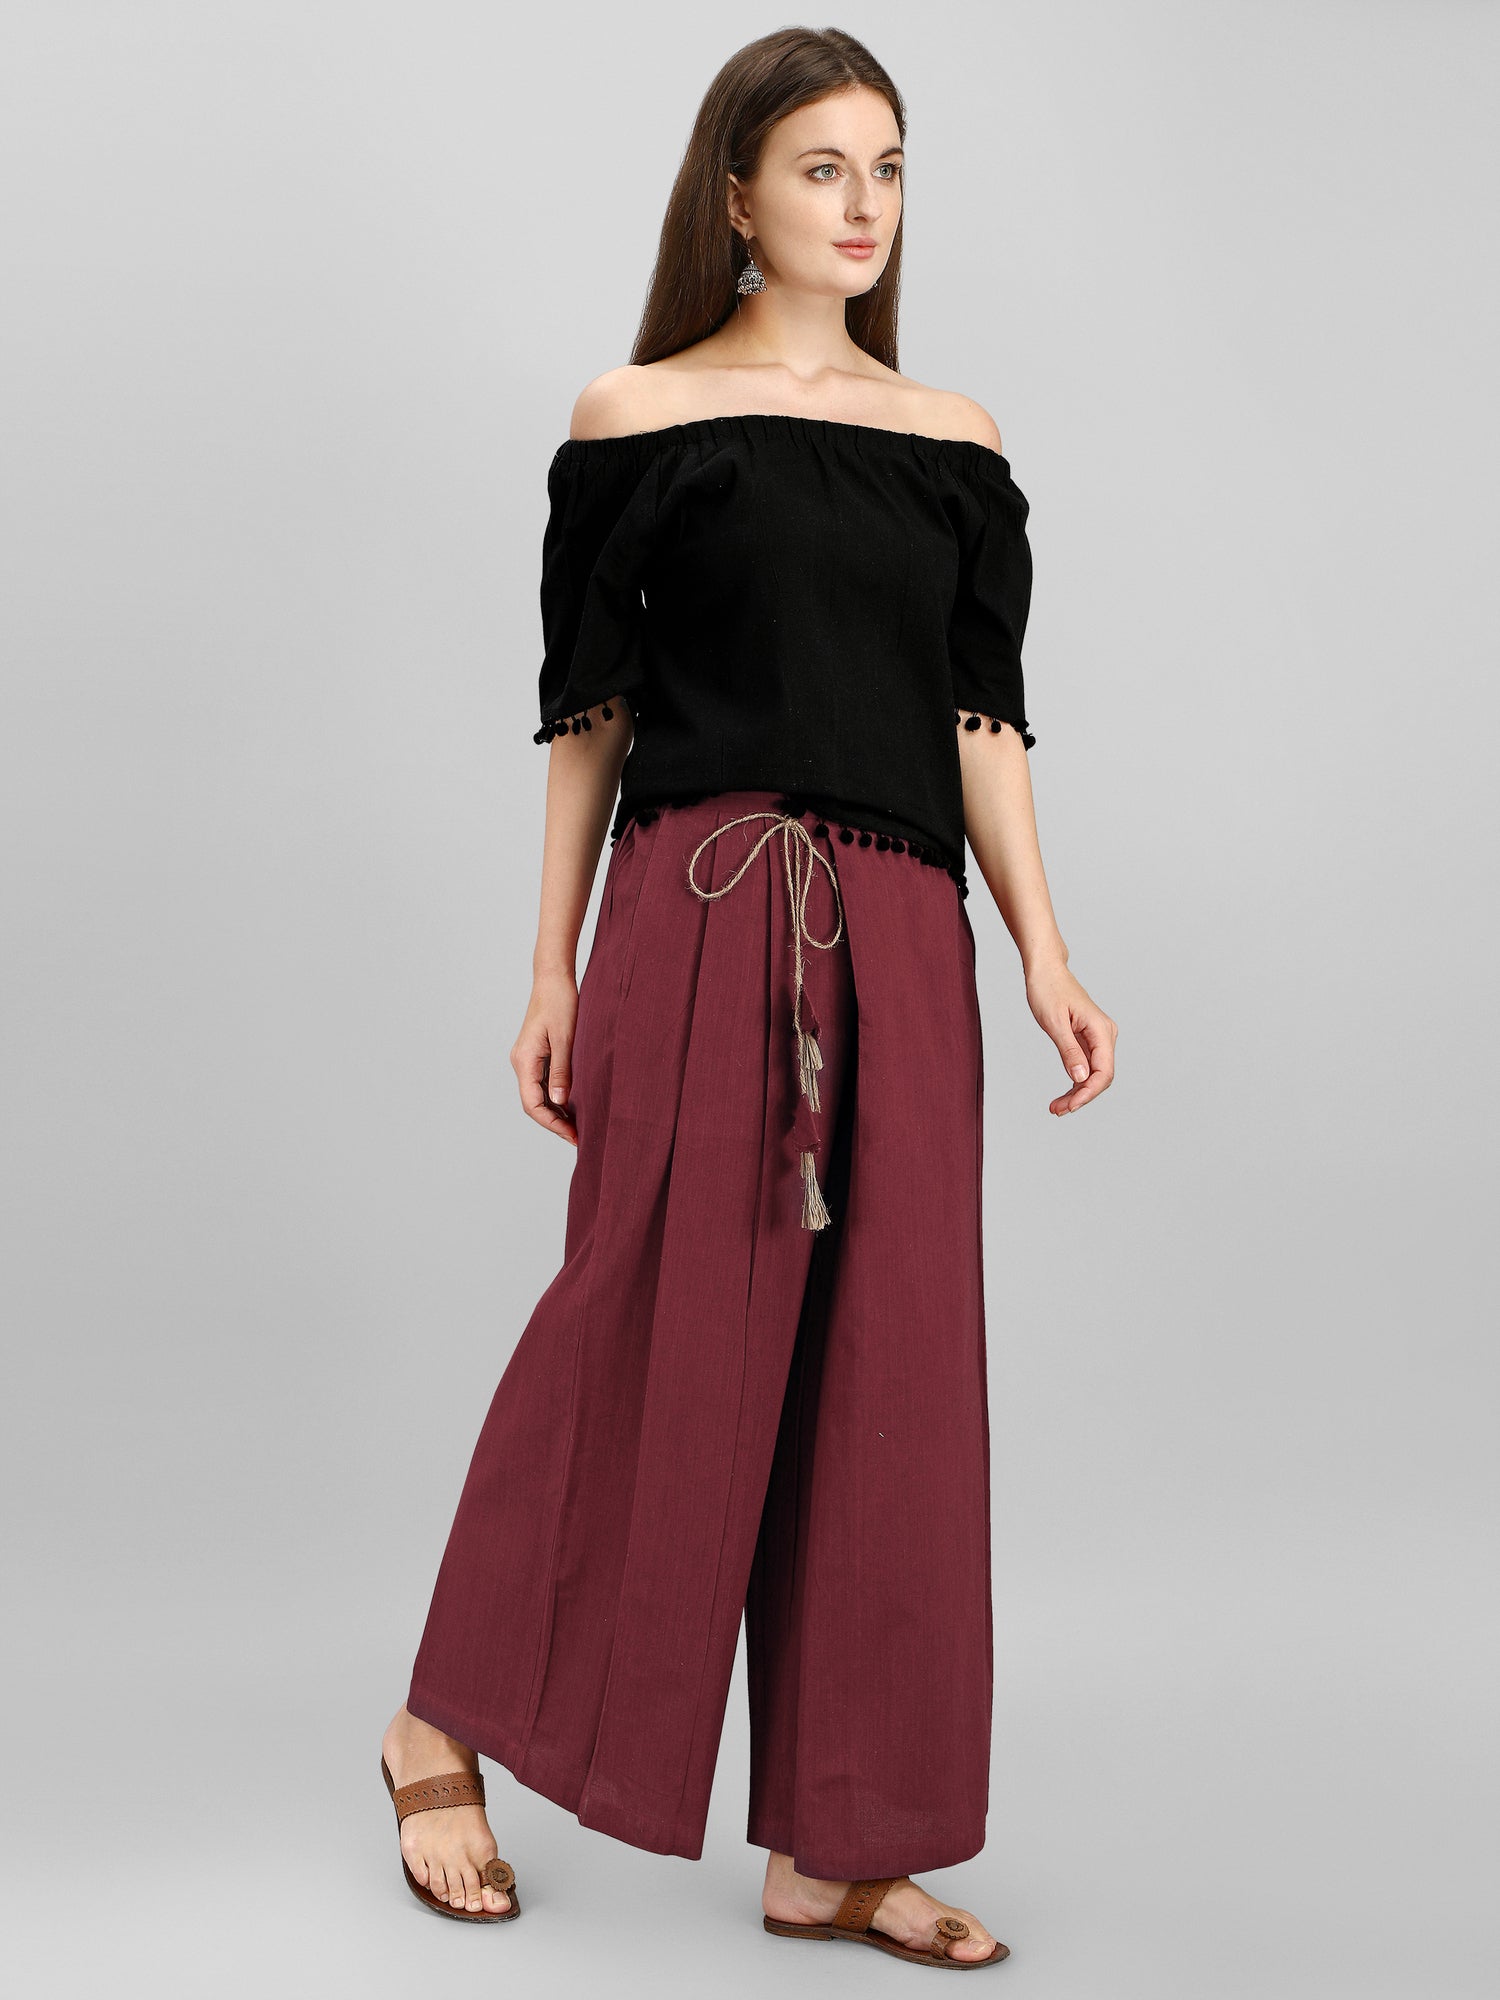 Women's Wine Skirt Pants Co-ordinated Set With Black Top - MESMORA FASHION